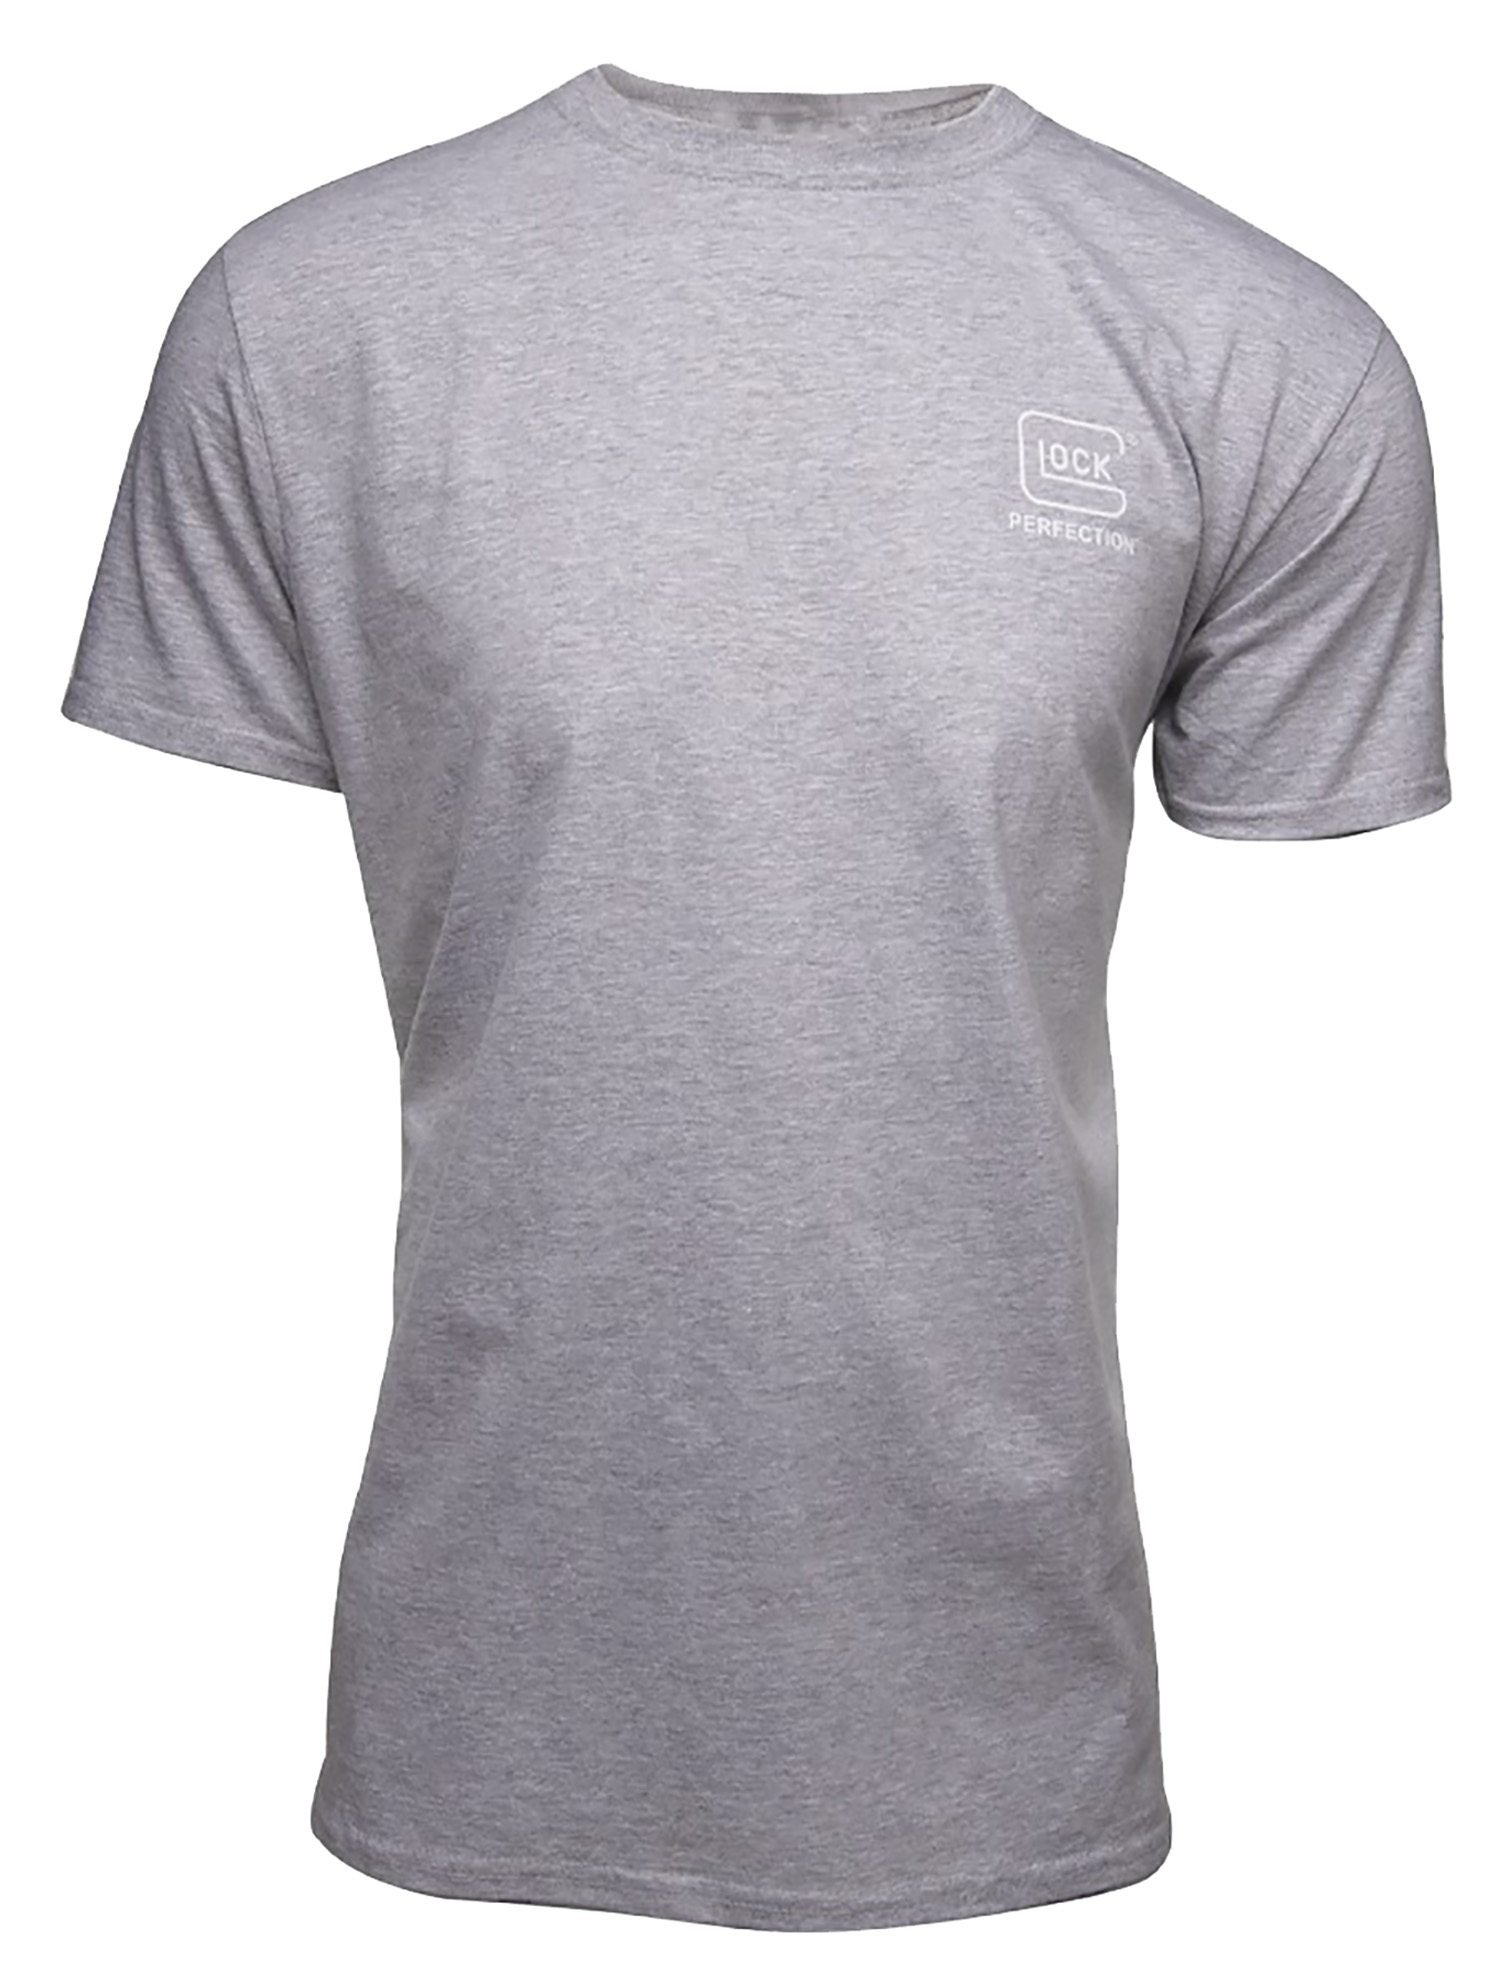 Glock AA75118 Pursuit Of Perfection T-Shirt Gray Medium Short Sleeve